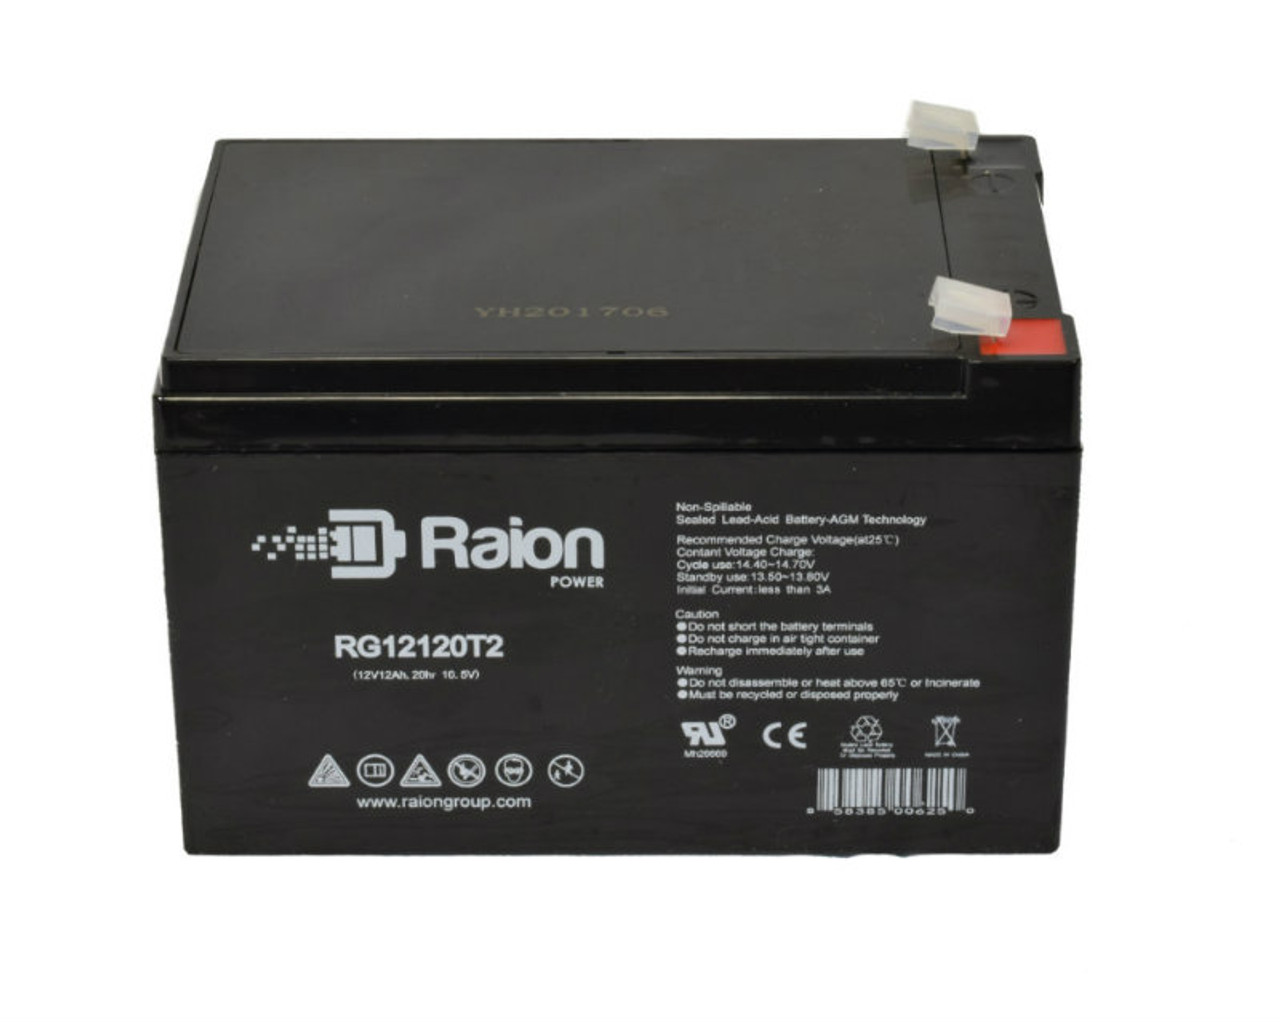 Raion Power RG12120T2 SLA Battery for Napel NP12120